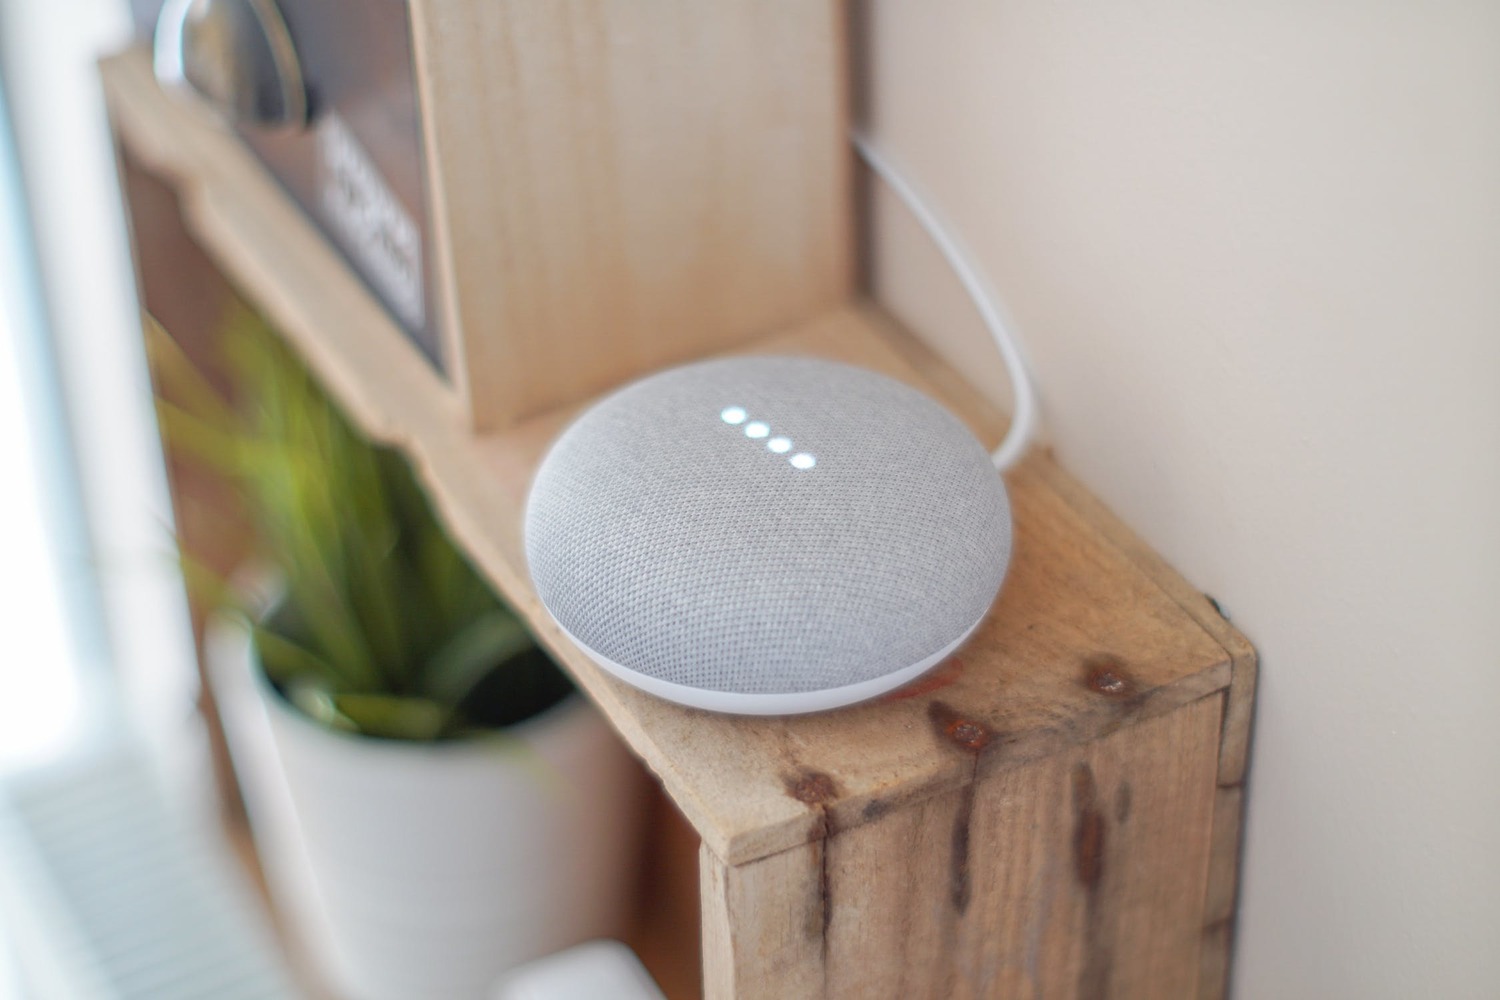 Google 於 2018 年 1 月推出智慧音箱 Google Home，後續銷售高達 320 萬台，成為智慧音箱界的龍頭。(圖為 Google Home Mini)   圖：翻攝自Pexel